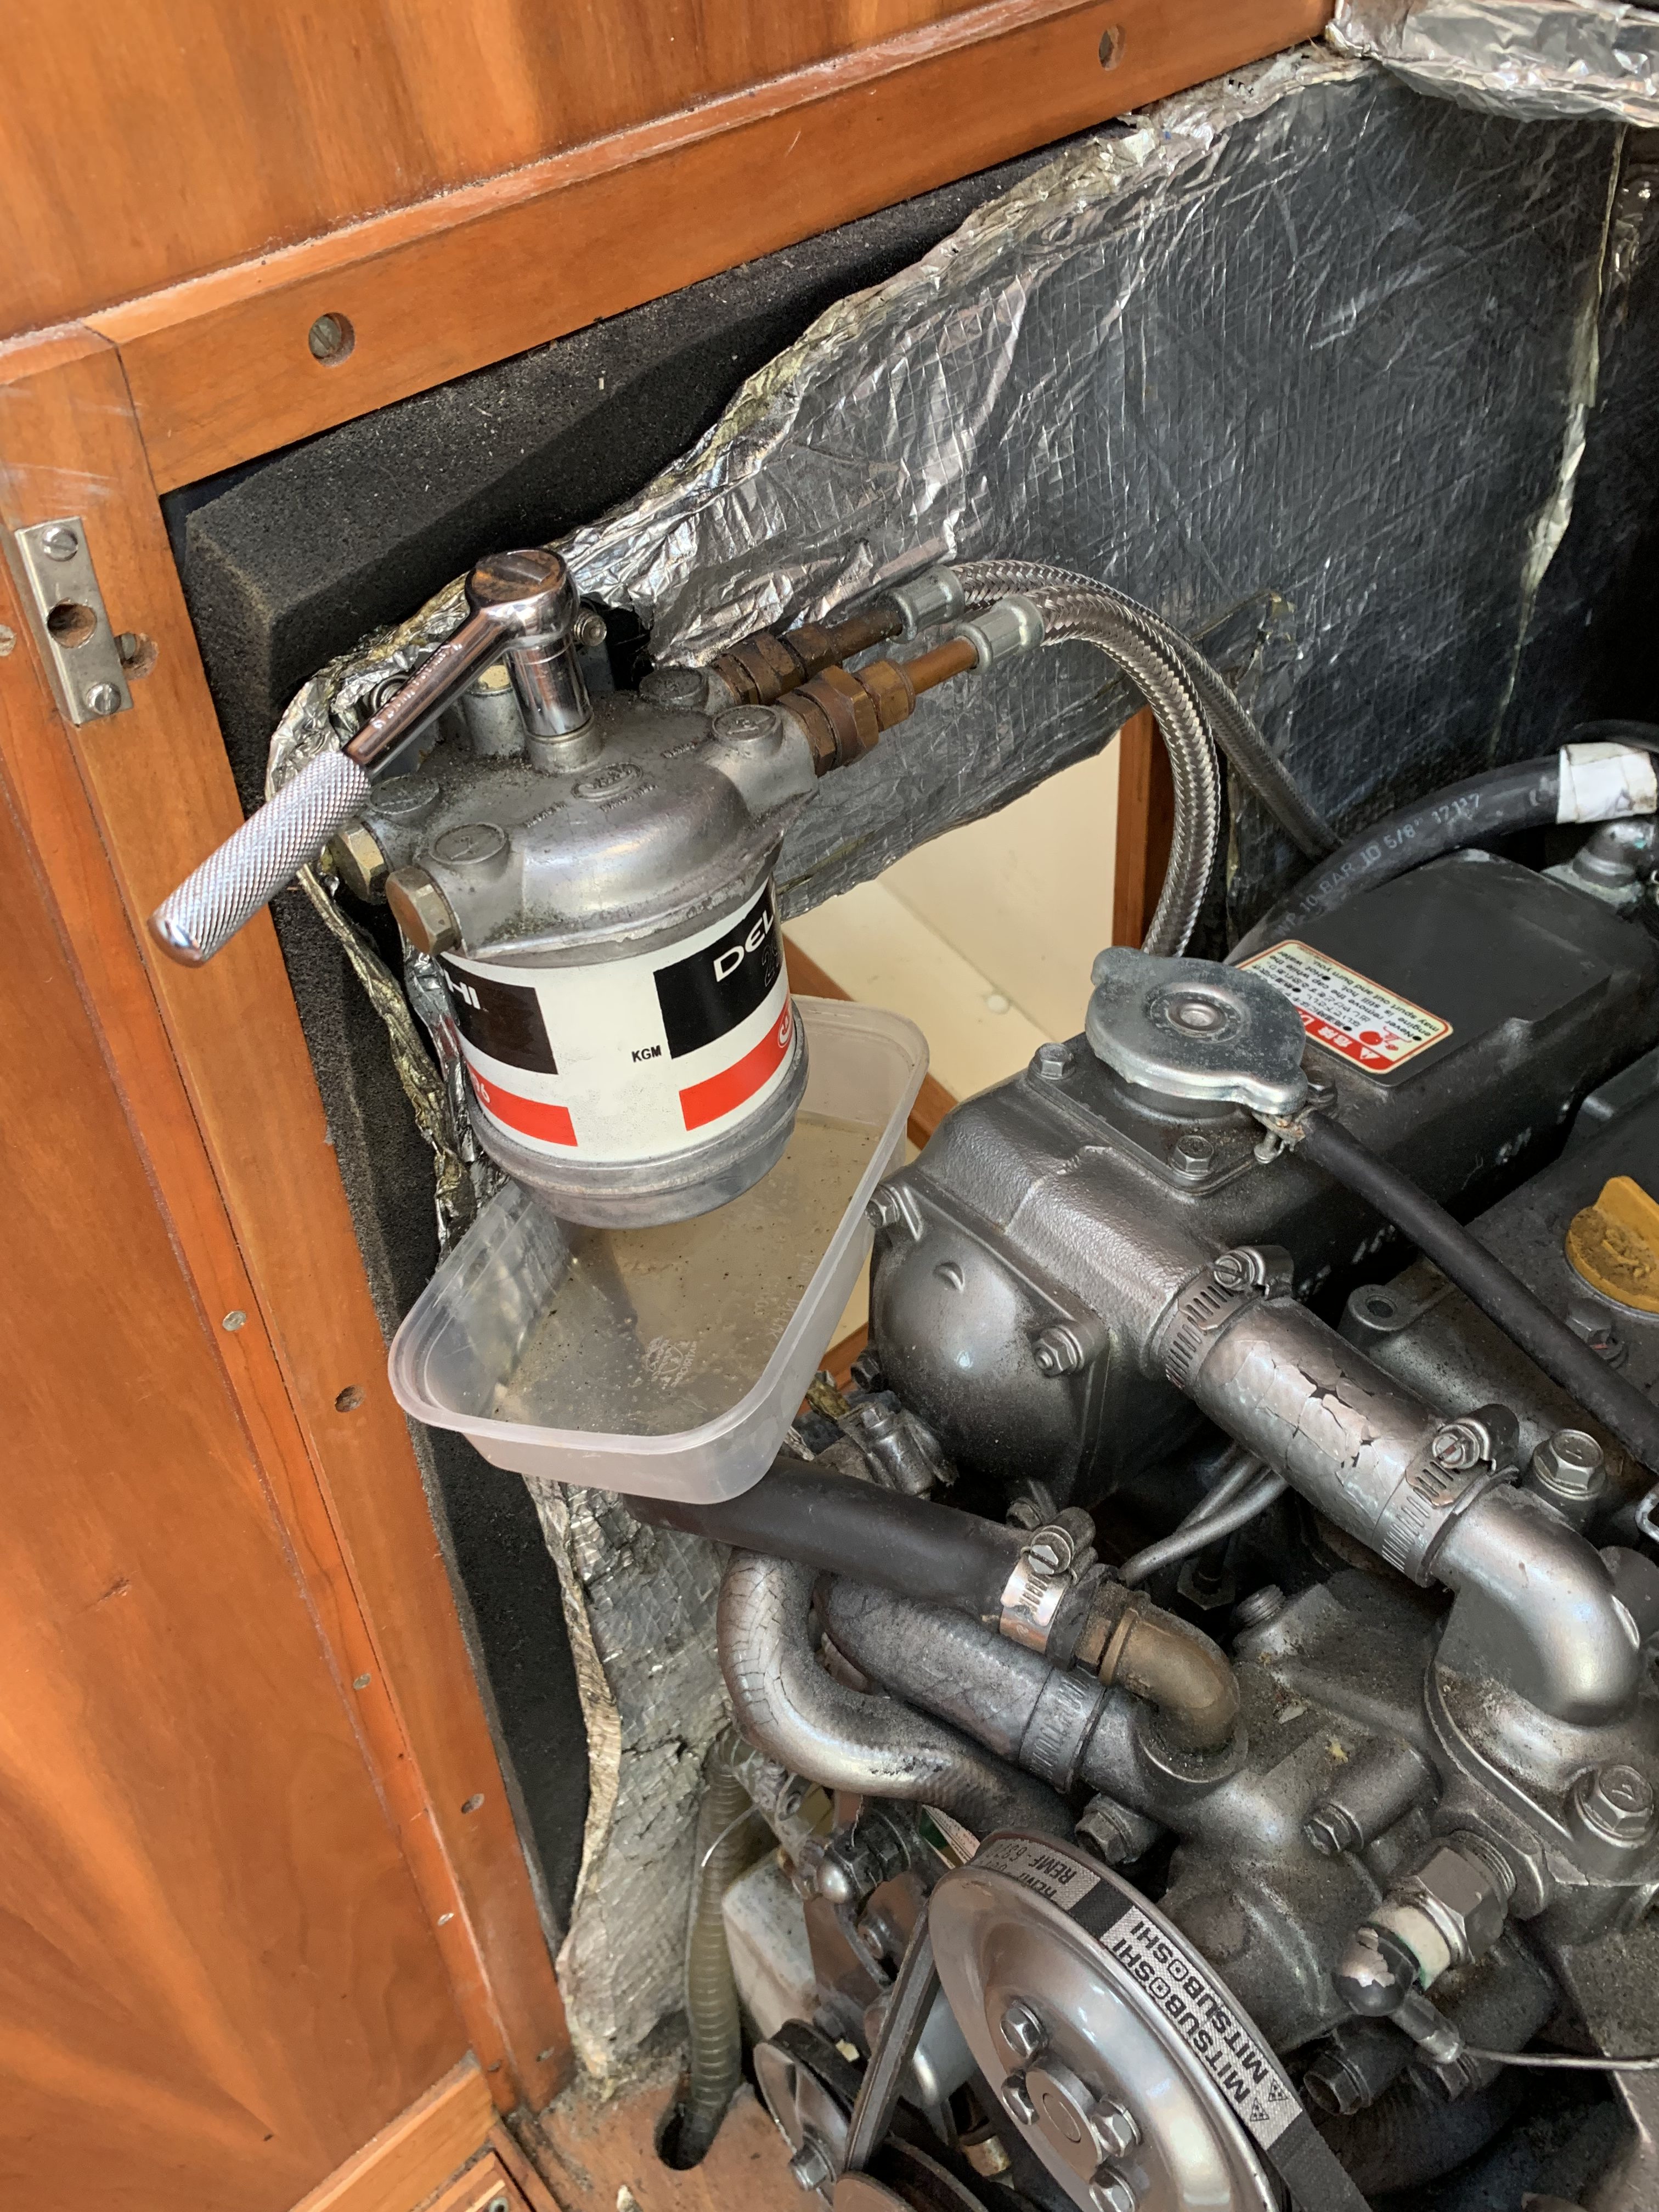 Engine maintenance – new filter